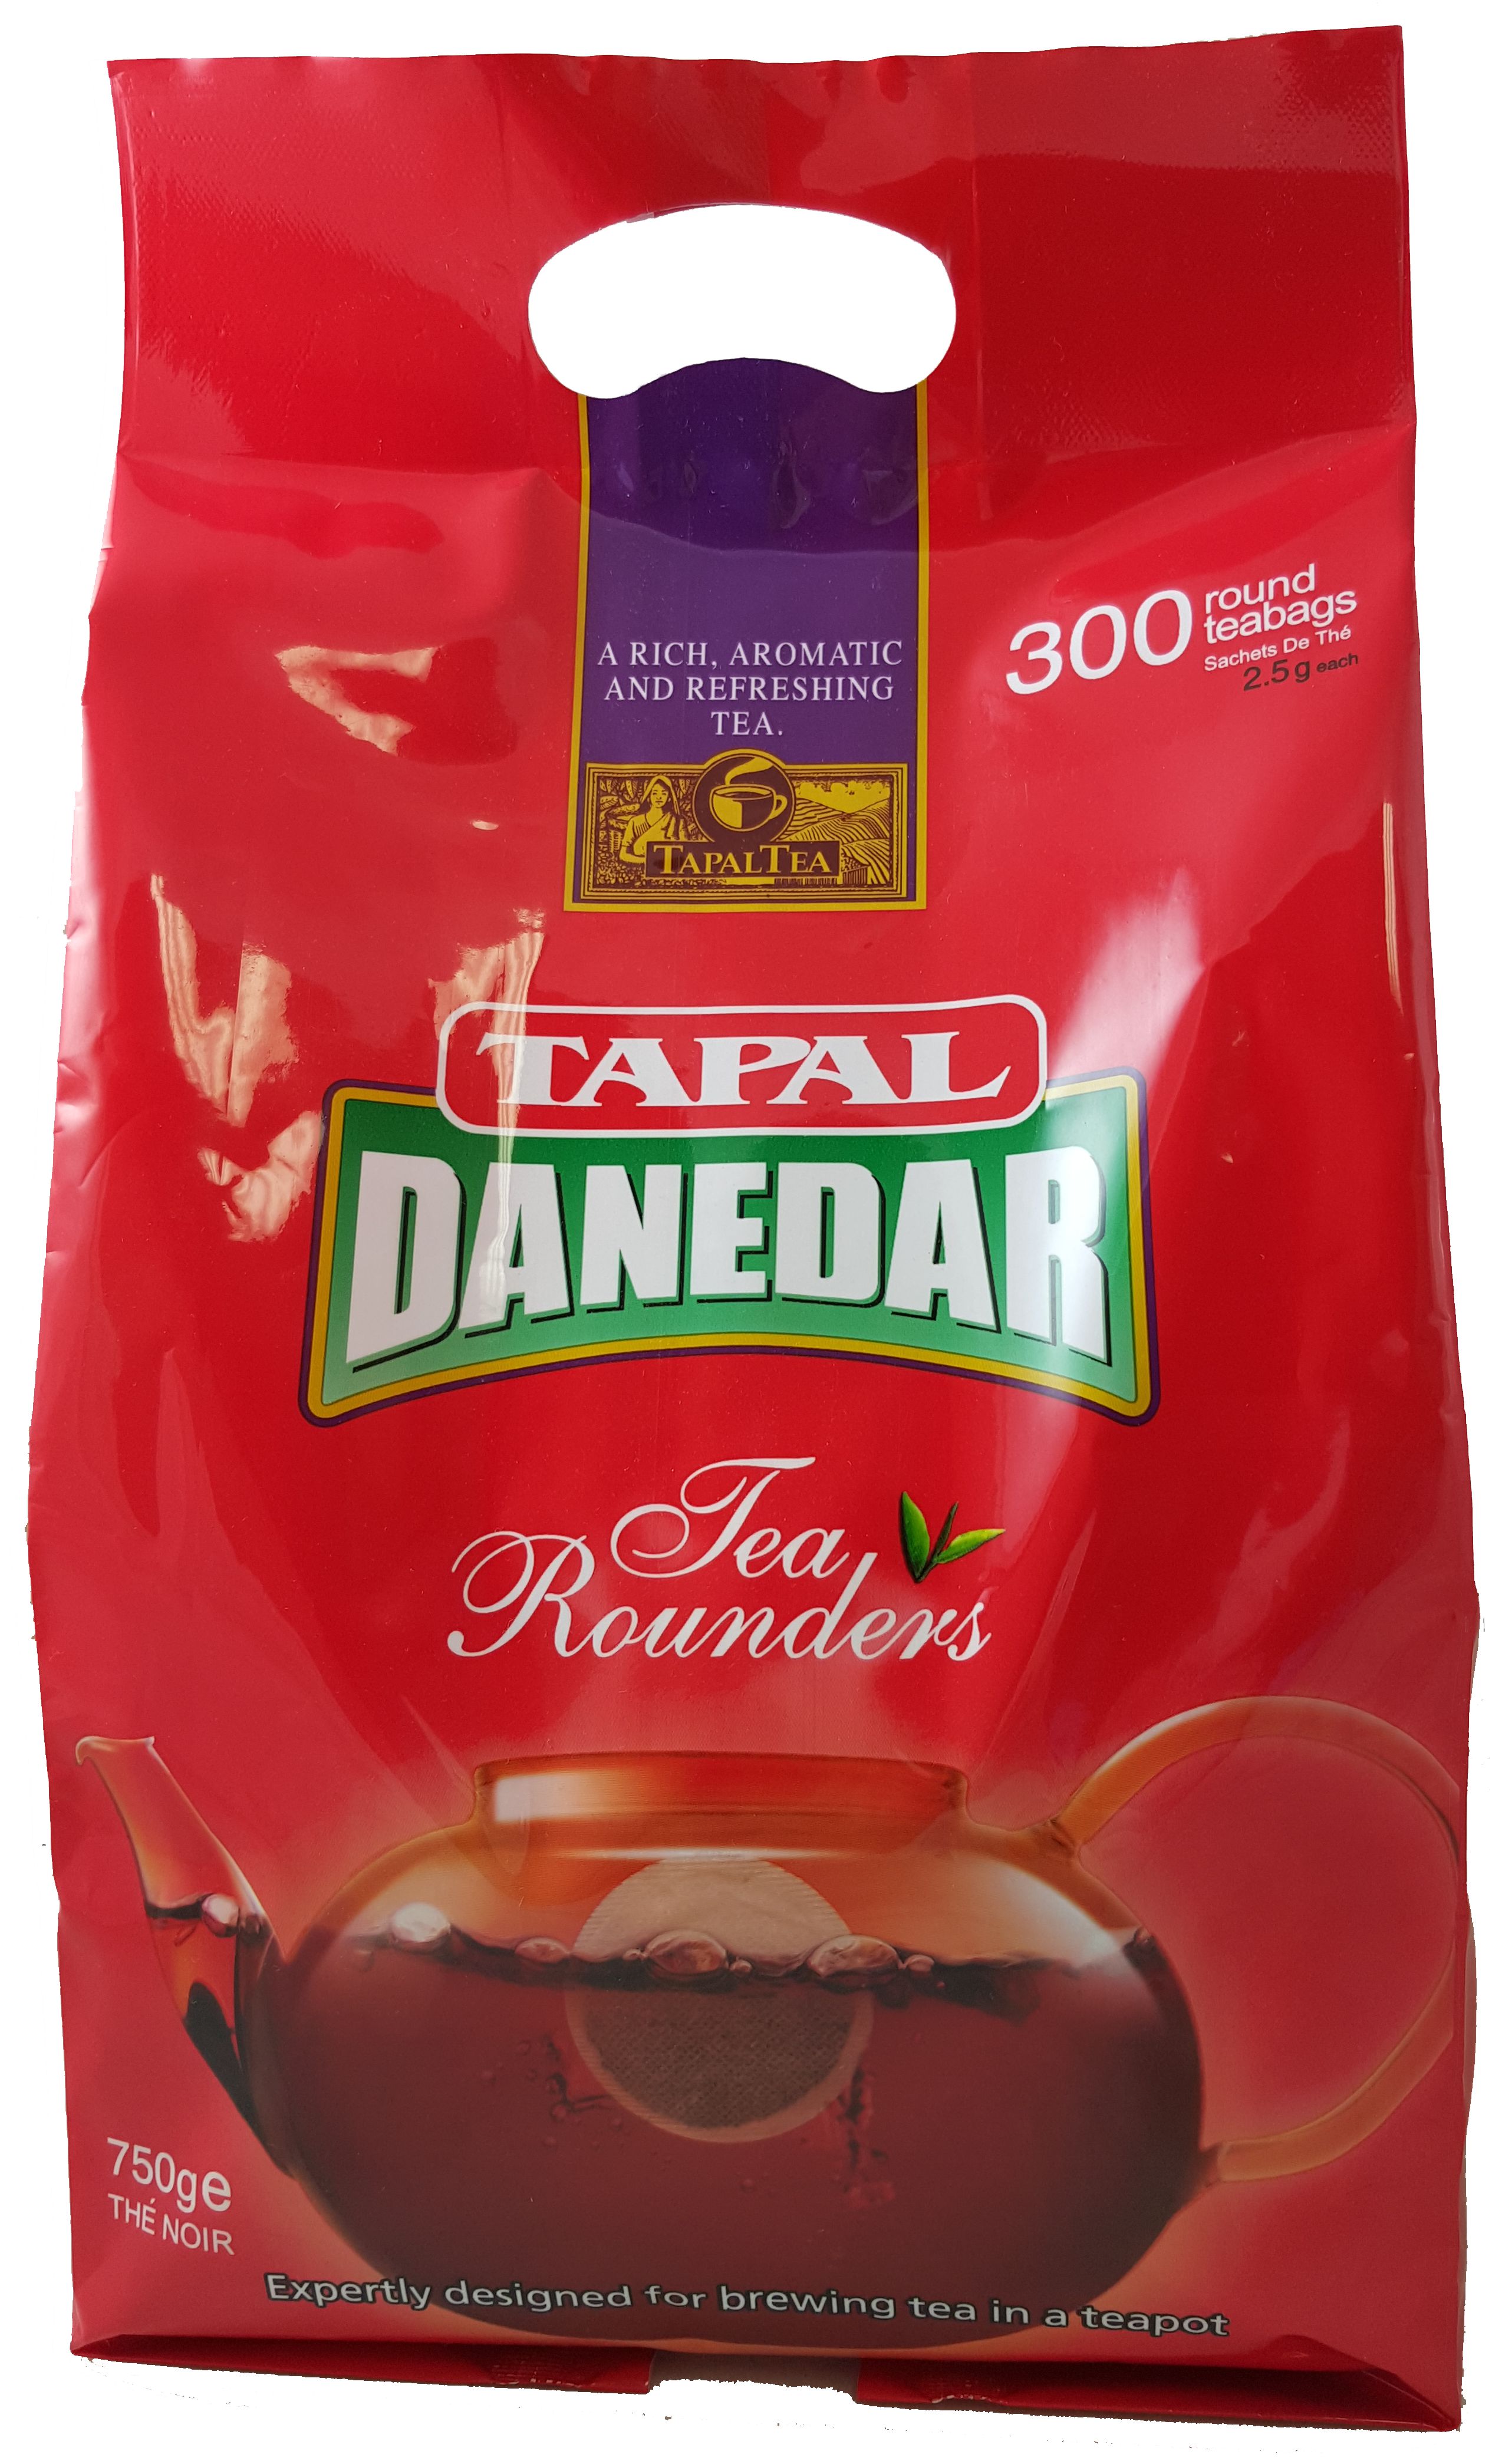 Danedar Rounders 300